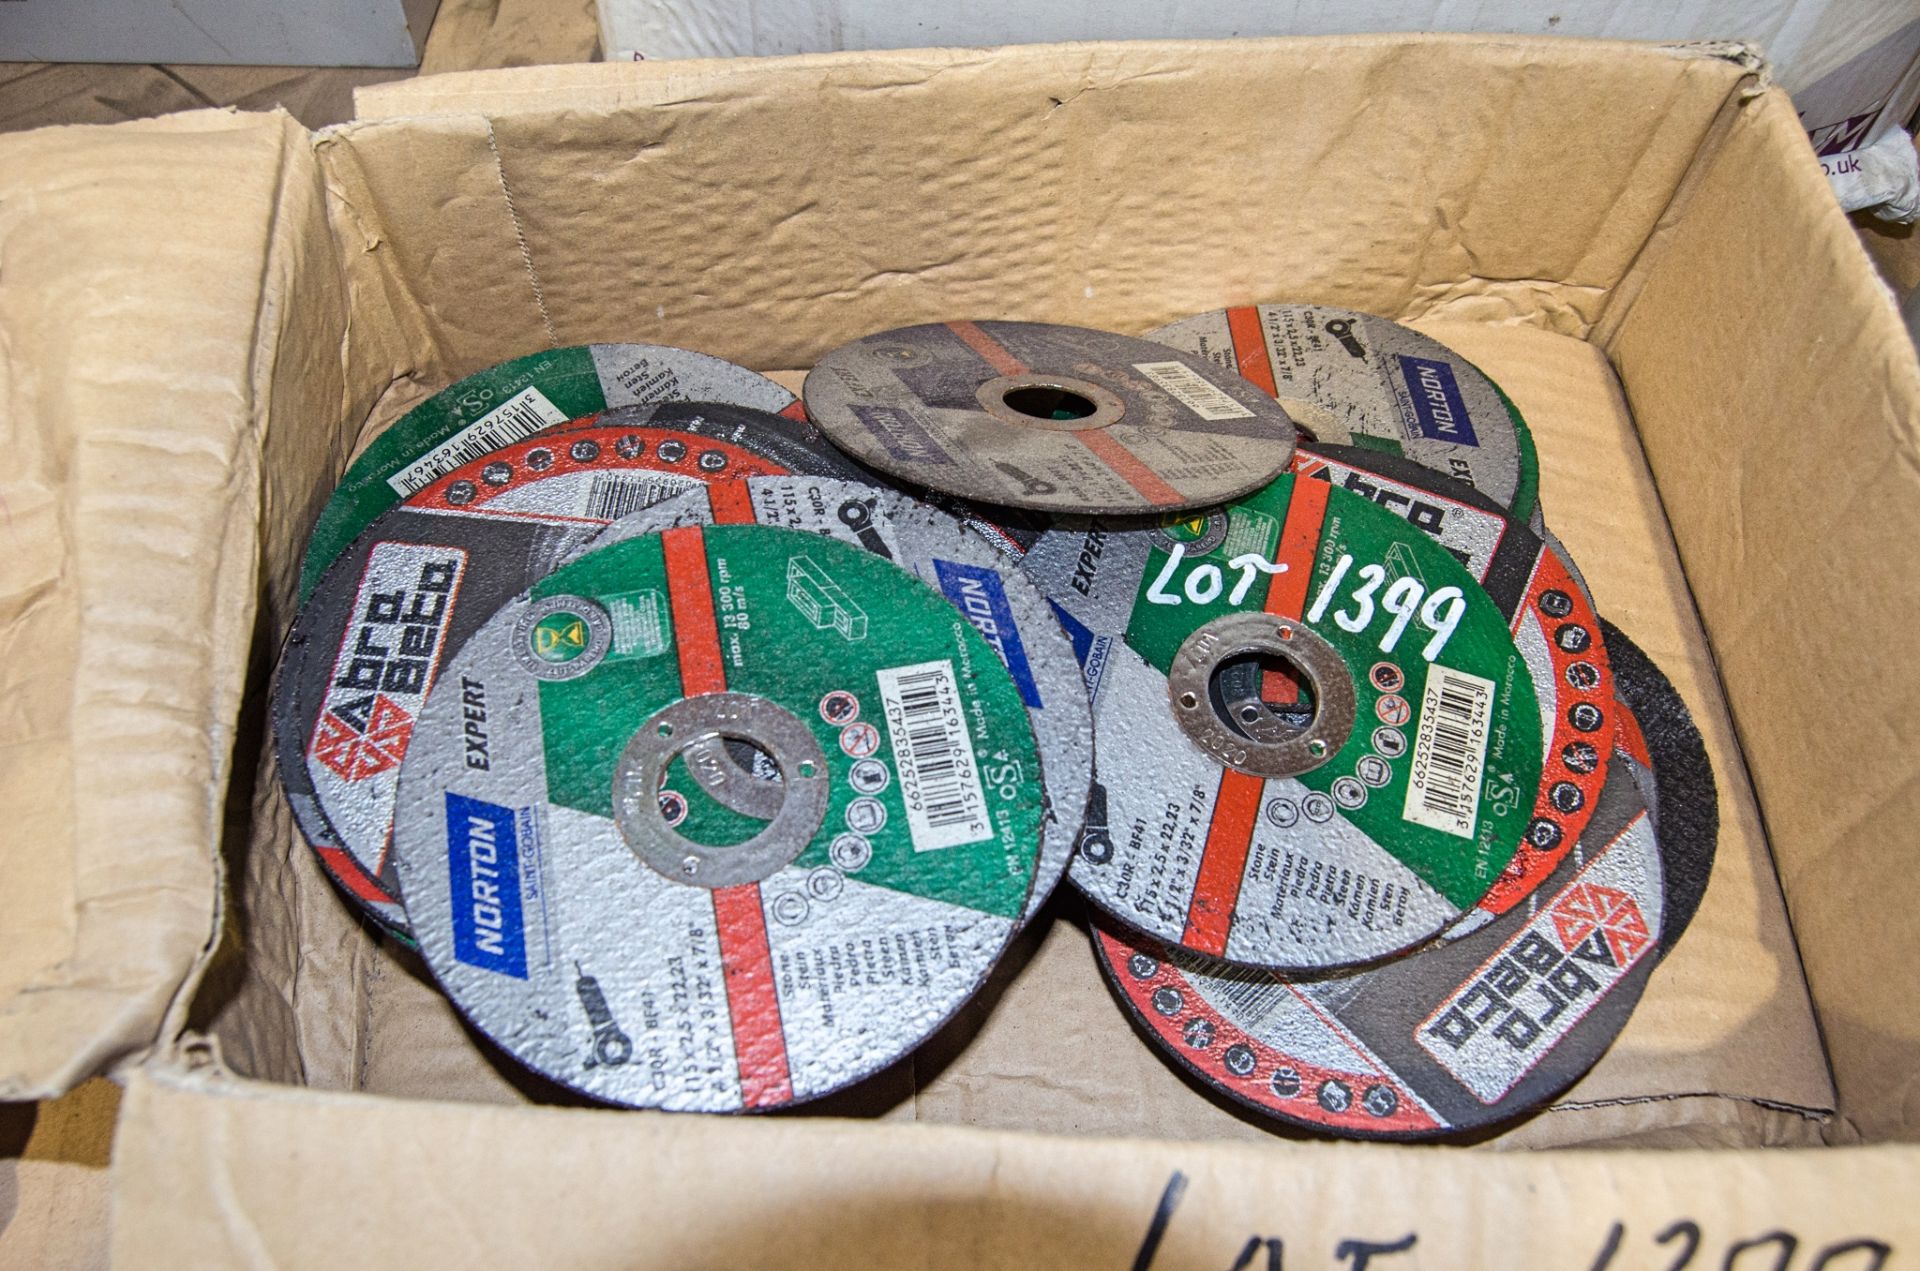 Quantity of 115mm cutting discs